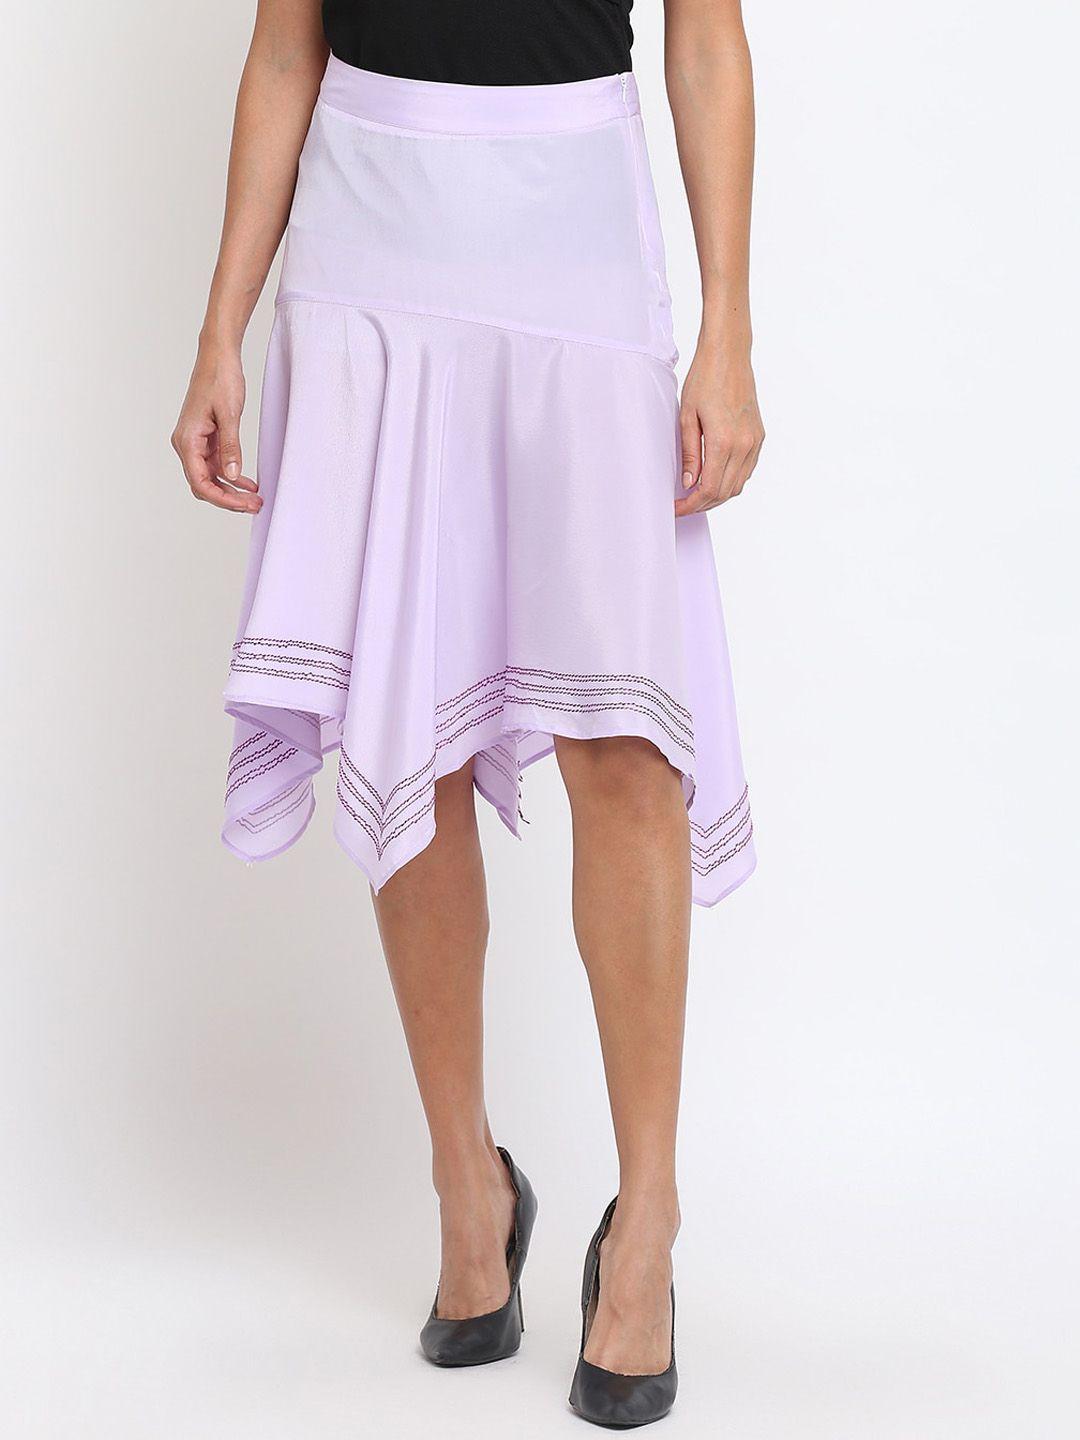 am ma women lavender solid knee-length flared skirt